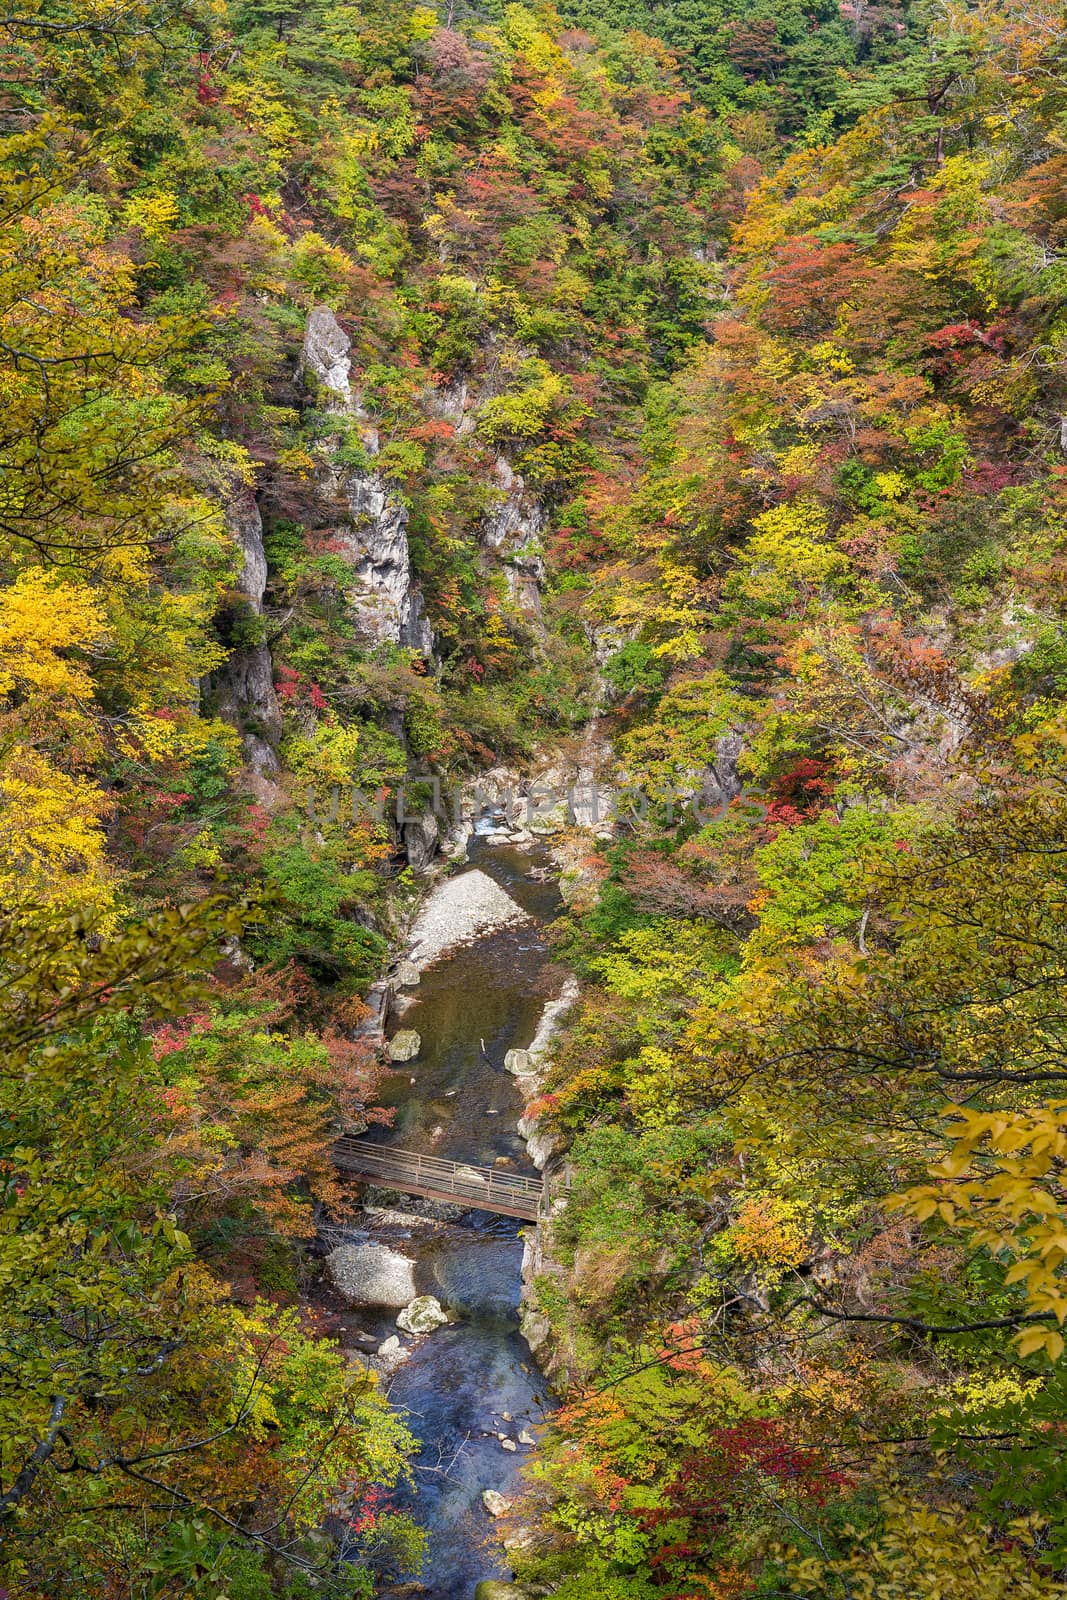 Naruko canyon with autumn foliage in Japan